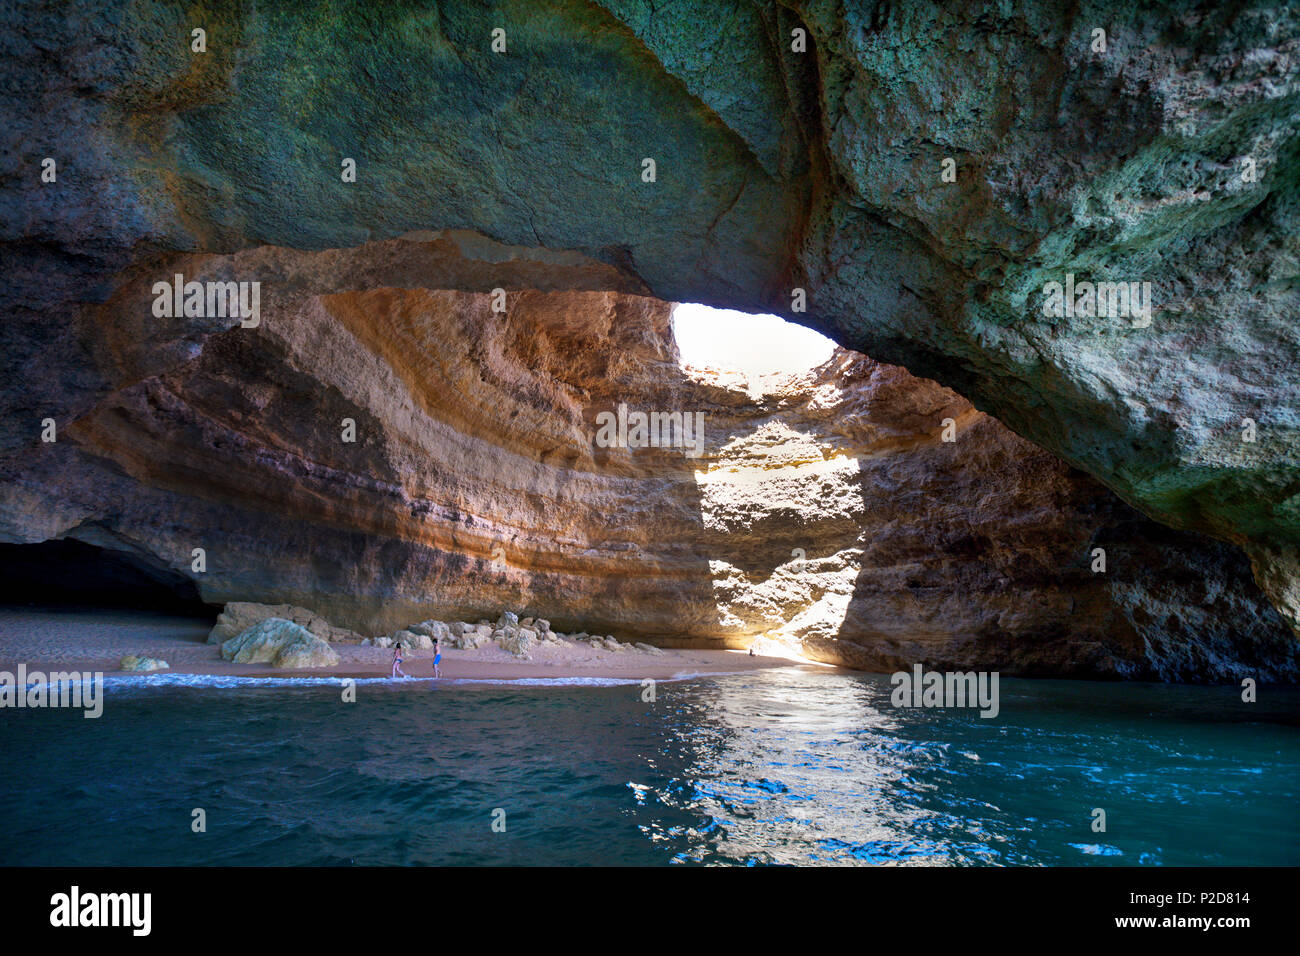 Grotto, O Algar, Algarve, Portugal Stock Photo